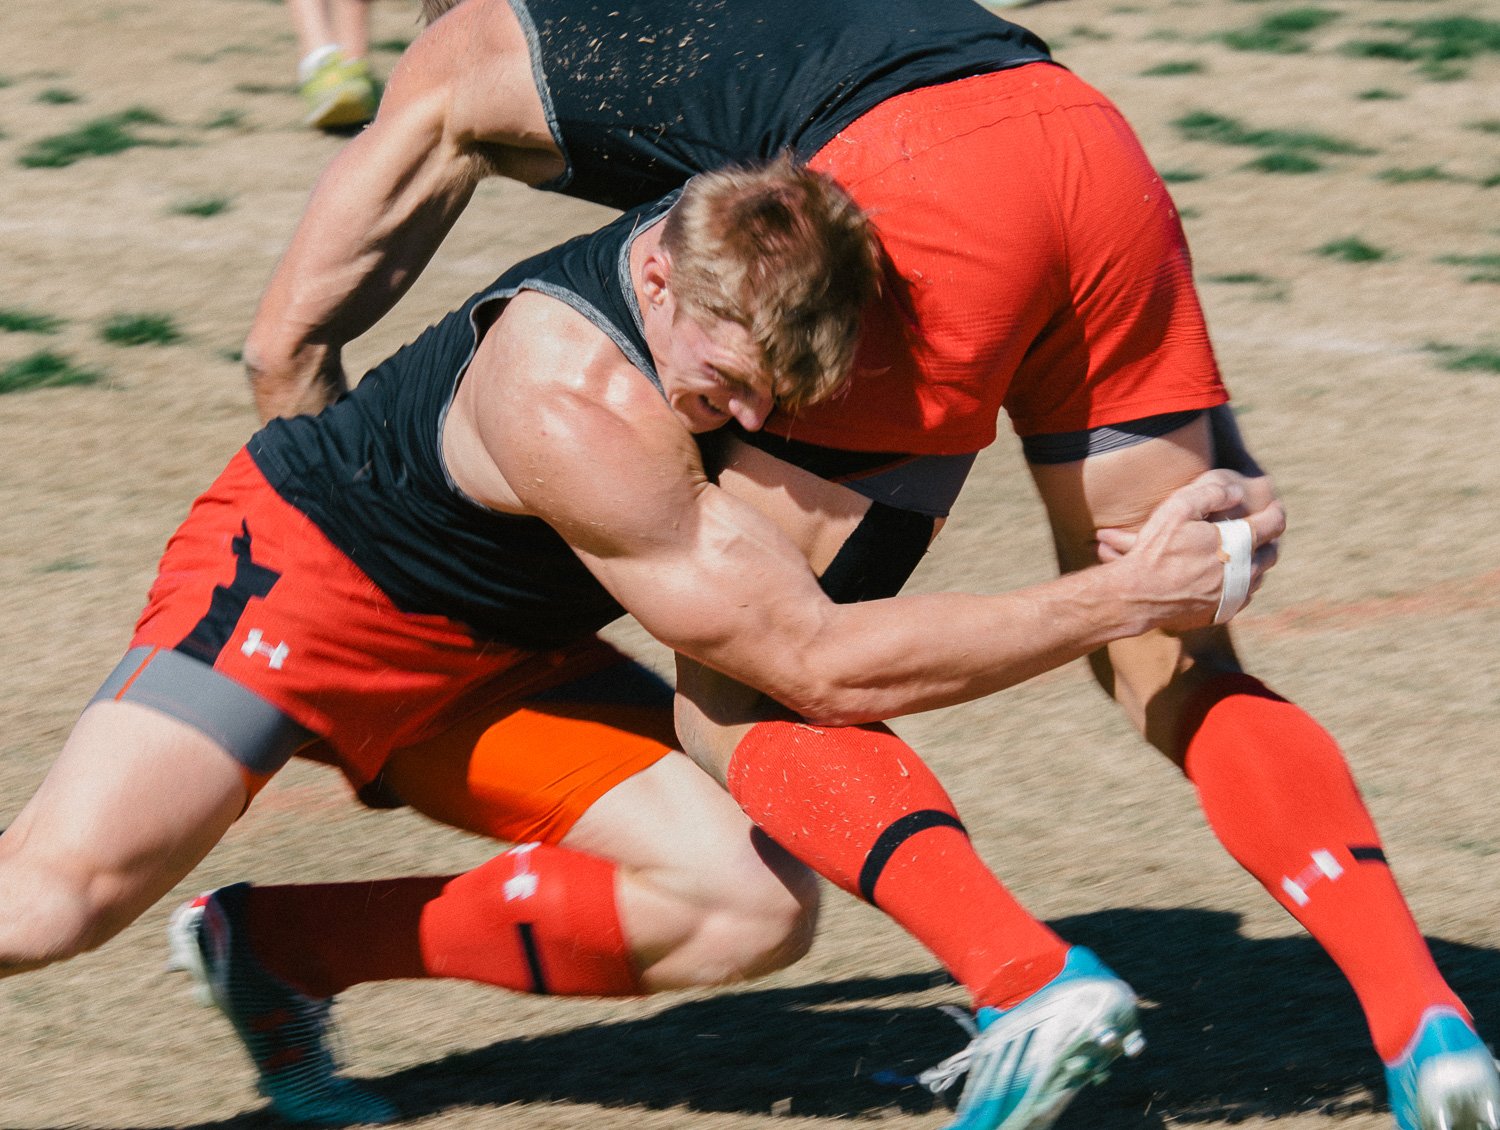  The Canadian Men's Rugby Sevens Team, Las Vegas, NV, for Sportsnet Magazine, 2015 